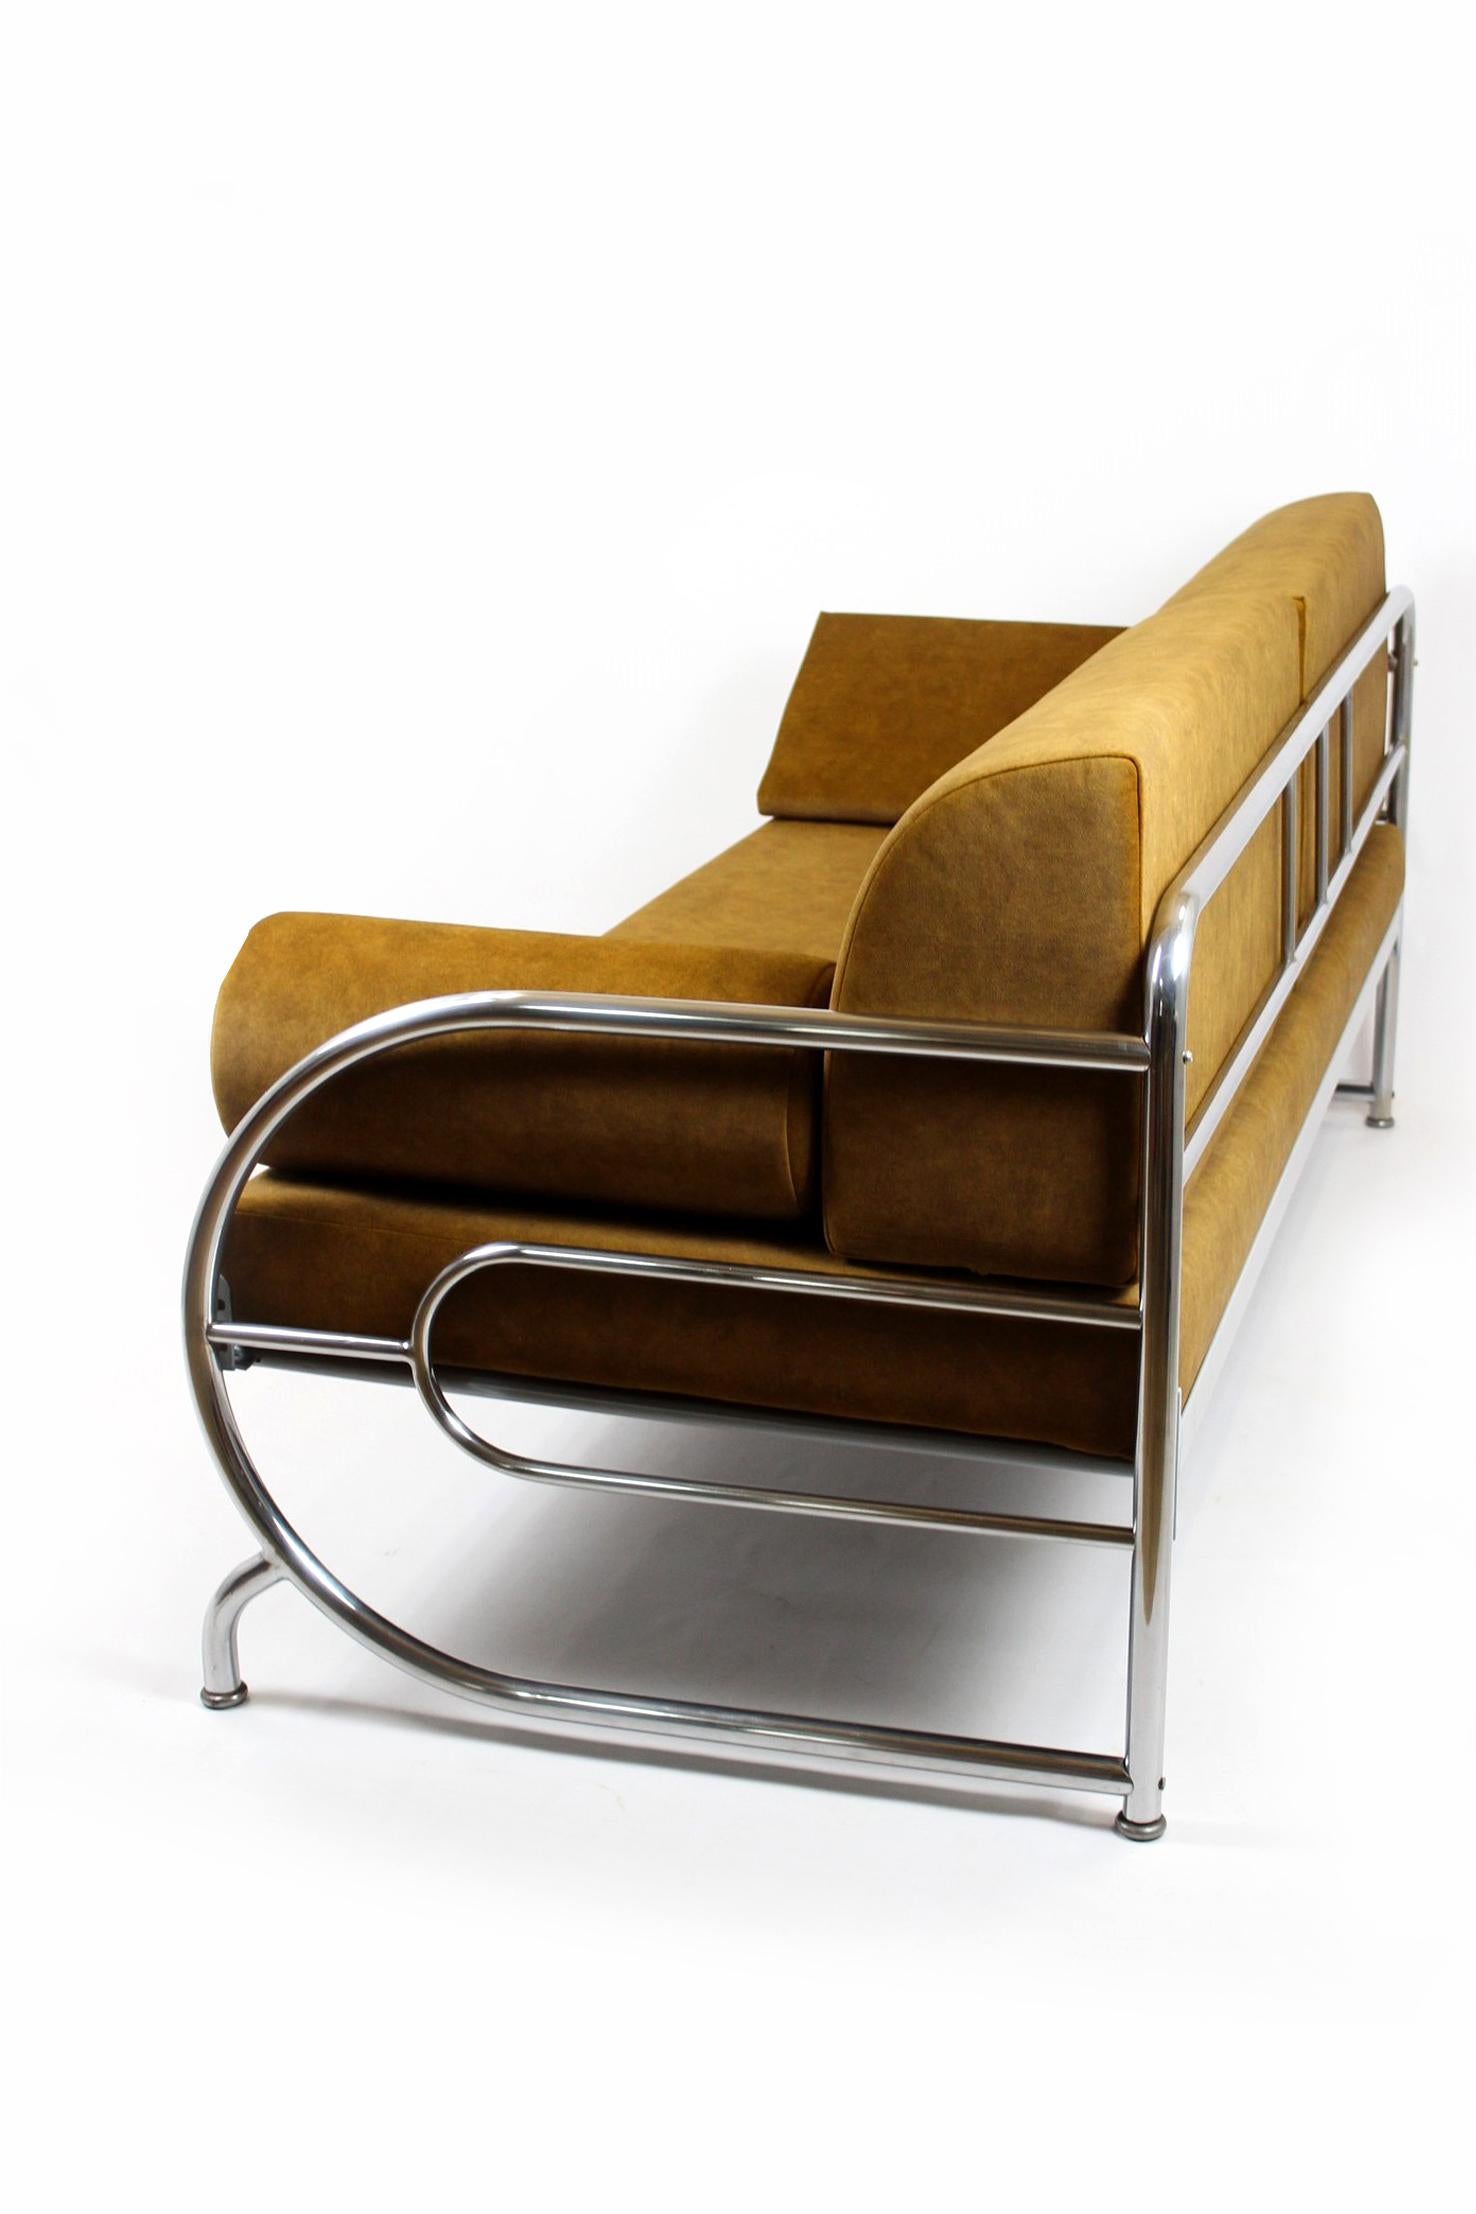 Restored Bauhaus Tubular Chrome Steel Sofa from Hynek Gottwald, 1930s For Sale 8